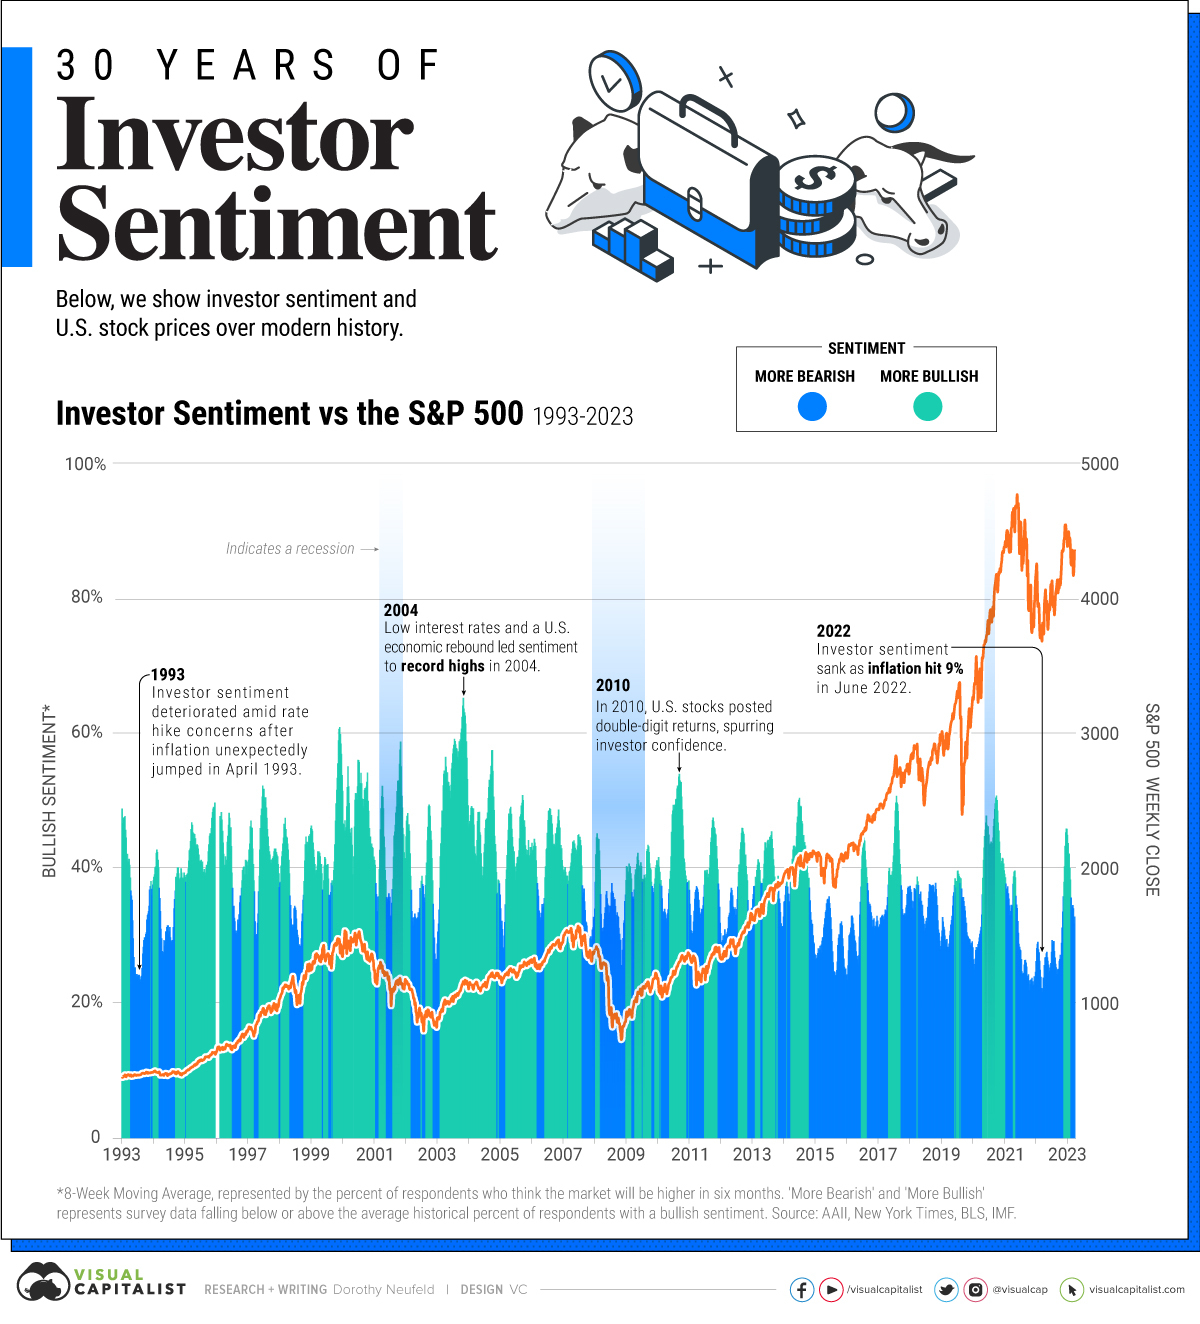 Visualizing 30 Years of Investor Sentiment